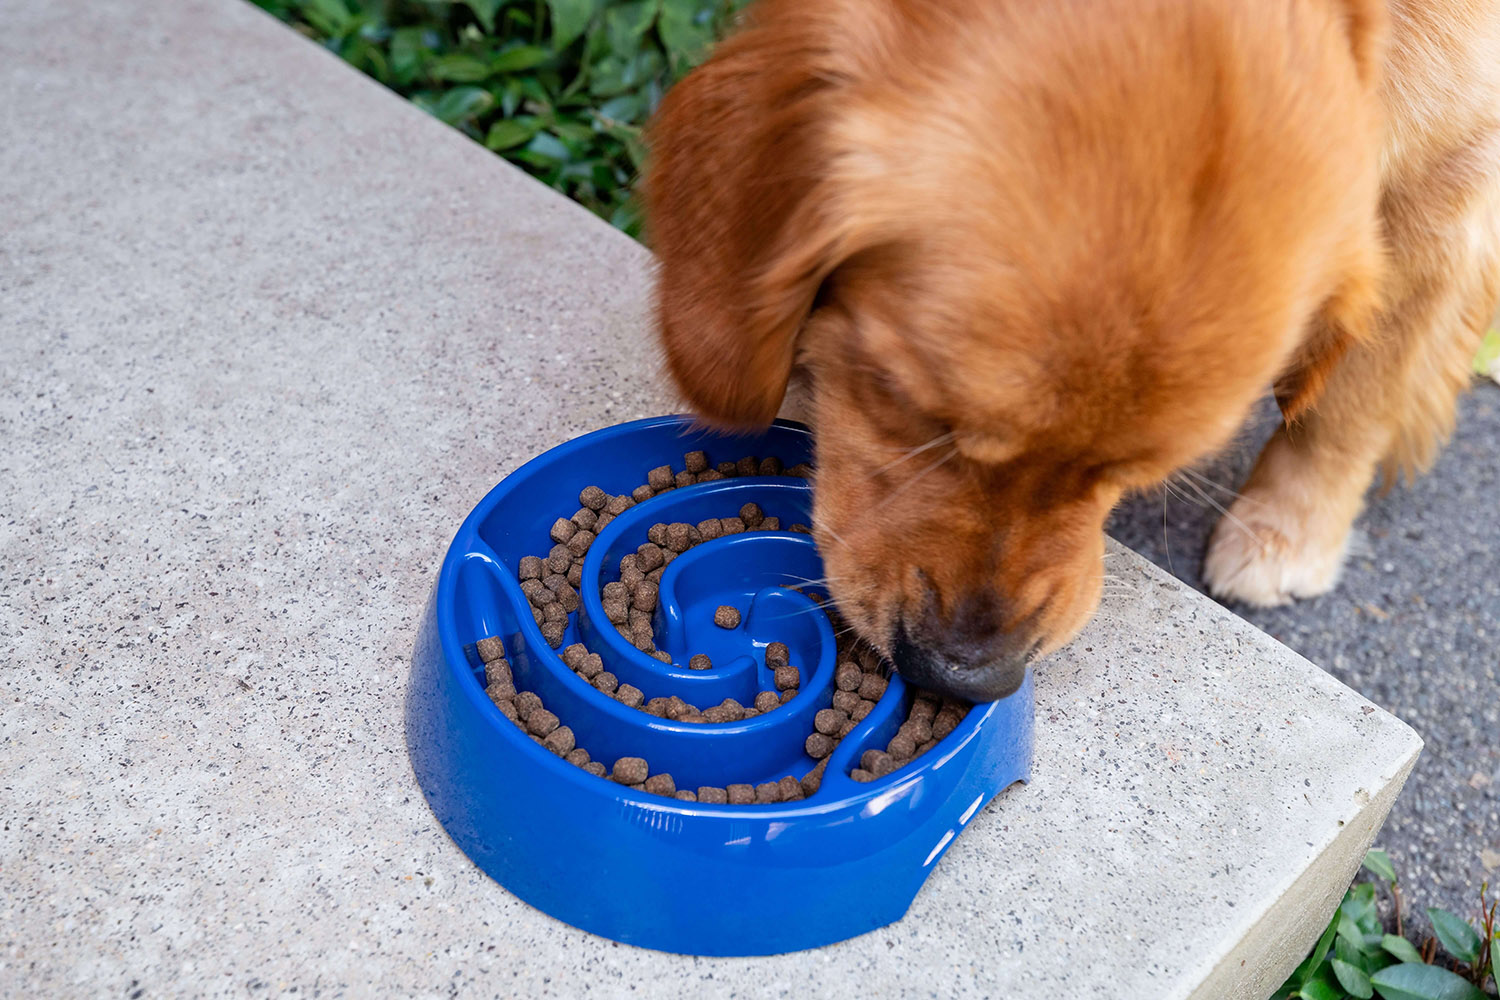 Golden Retriever eats kibble from blue slow feeder bowl